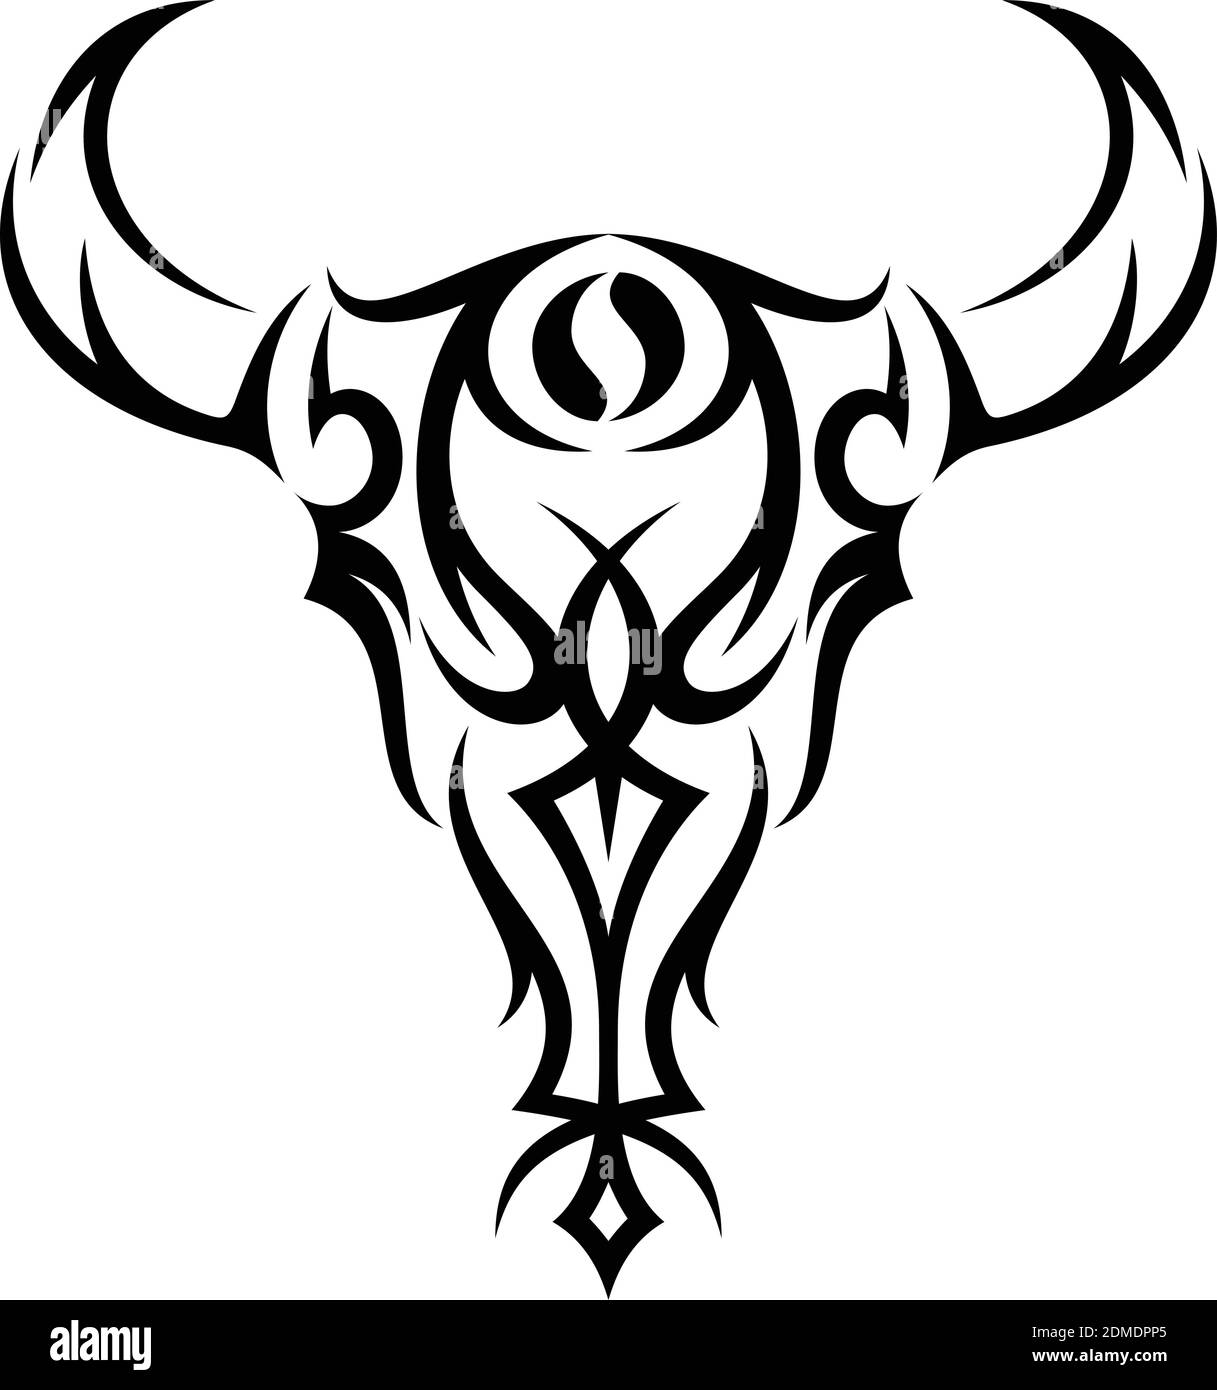 Best creative silhouette illustration head bison tribal design concept.  Simple animal wildlife. Vector illustration   Stock Vector Image  & Art - Alamy